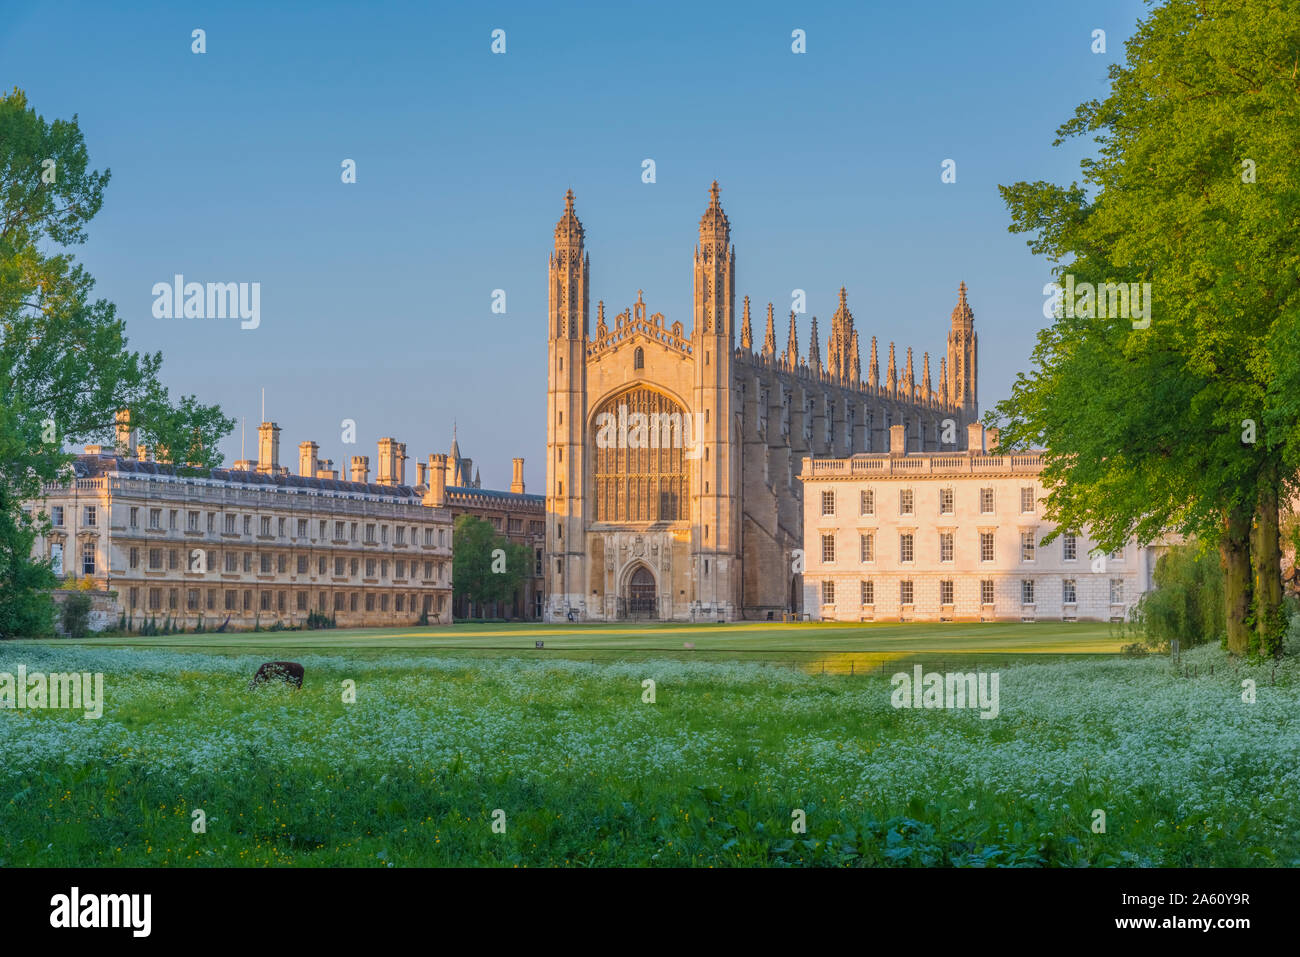 King's College, King's College Chapel, The Backs, Cambridge, Cambridgeshire, England, United Kingdom, Europe Stock Photo